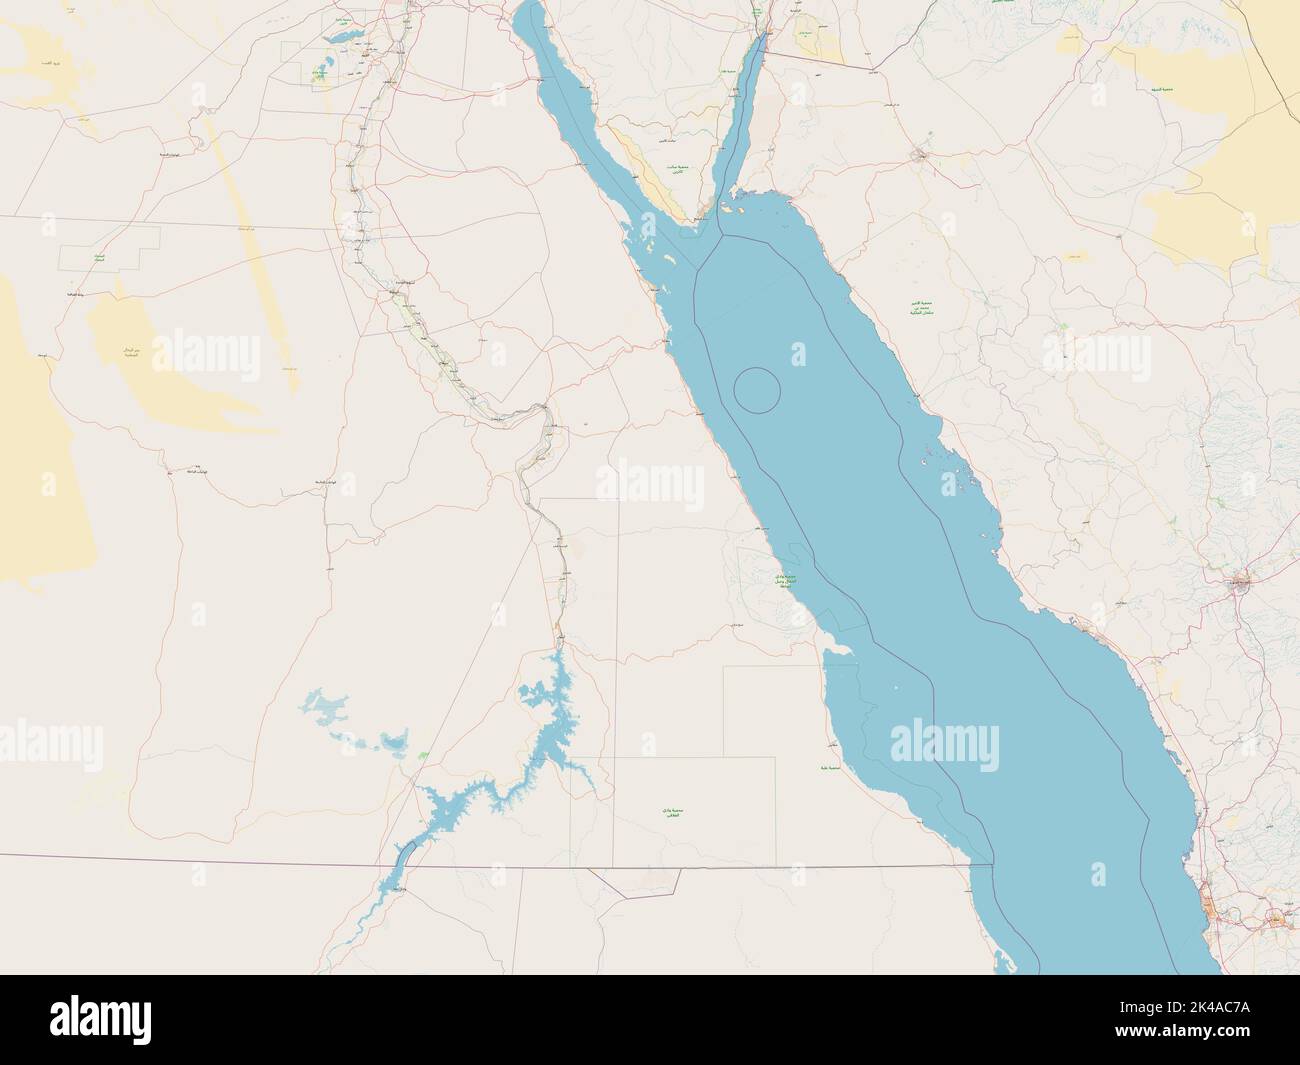 Al Bahr al Ahmar, governorate of Egypt. Open Street Map Stock Photo